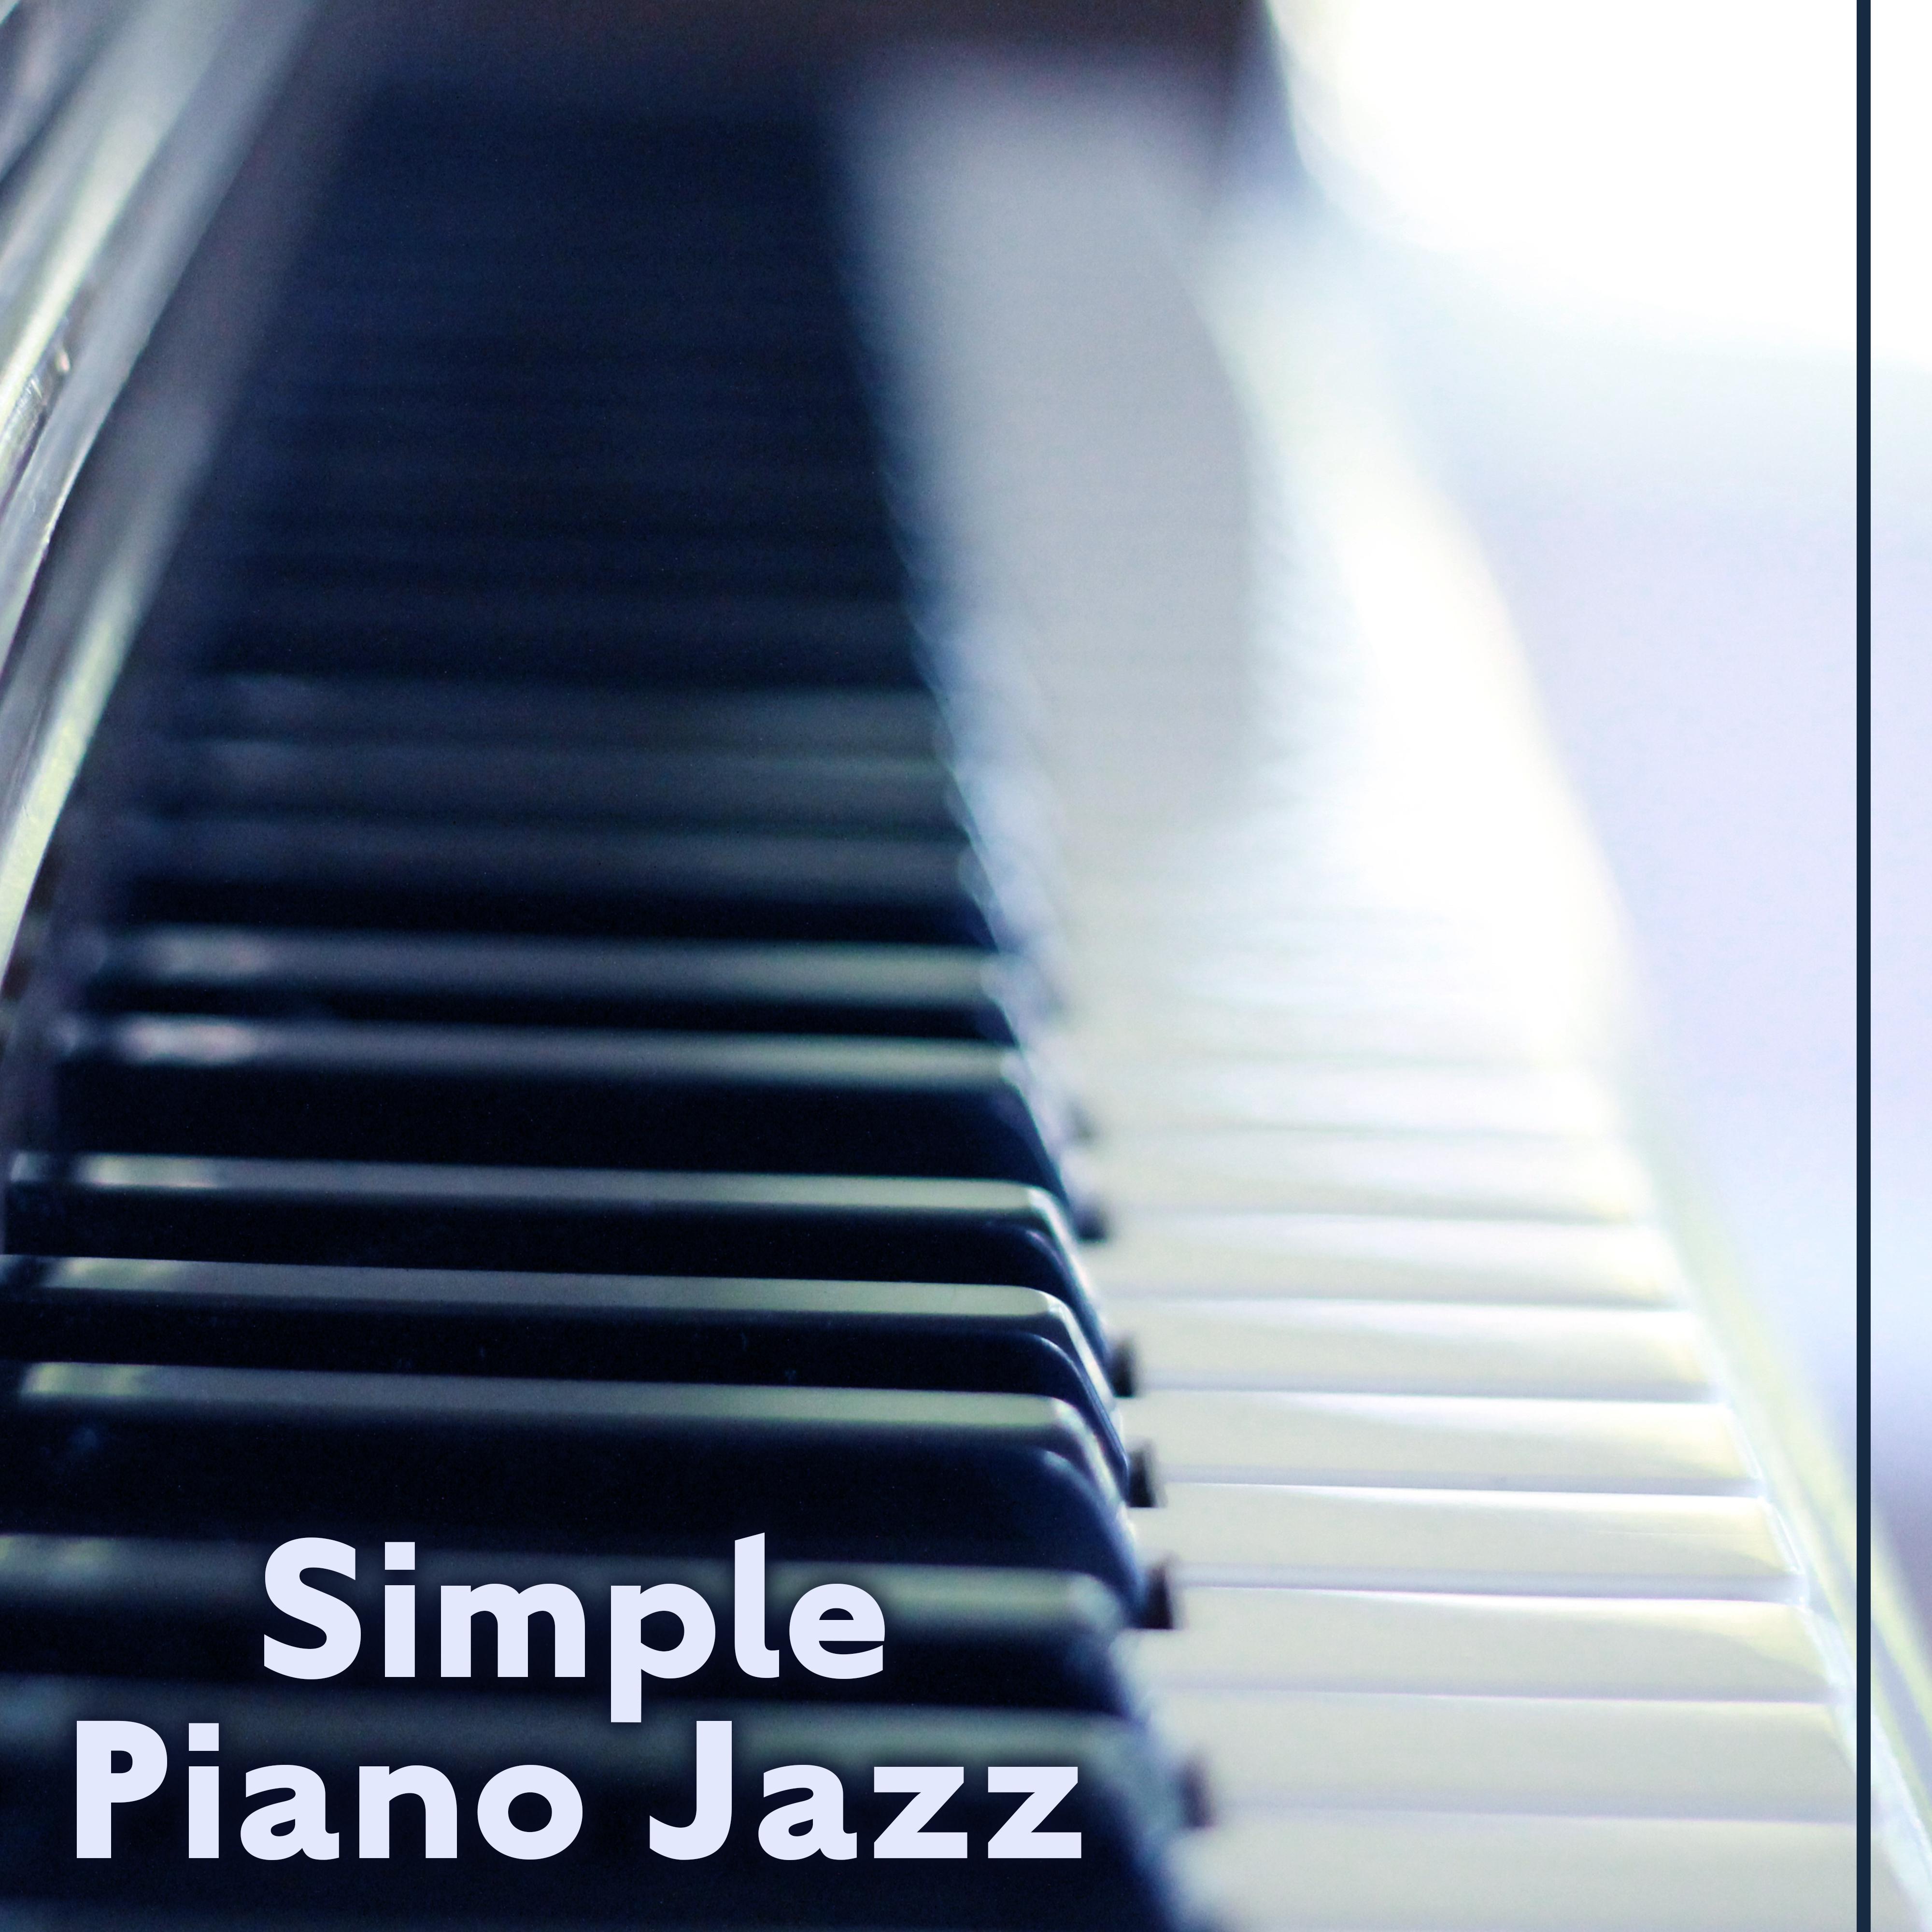 Simple Piano Jazz  Rest with Jazz, Easy Listening Piano Music, Smooth Night, Jazz Club